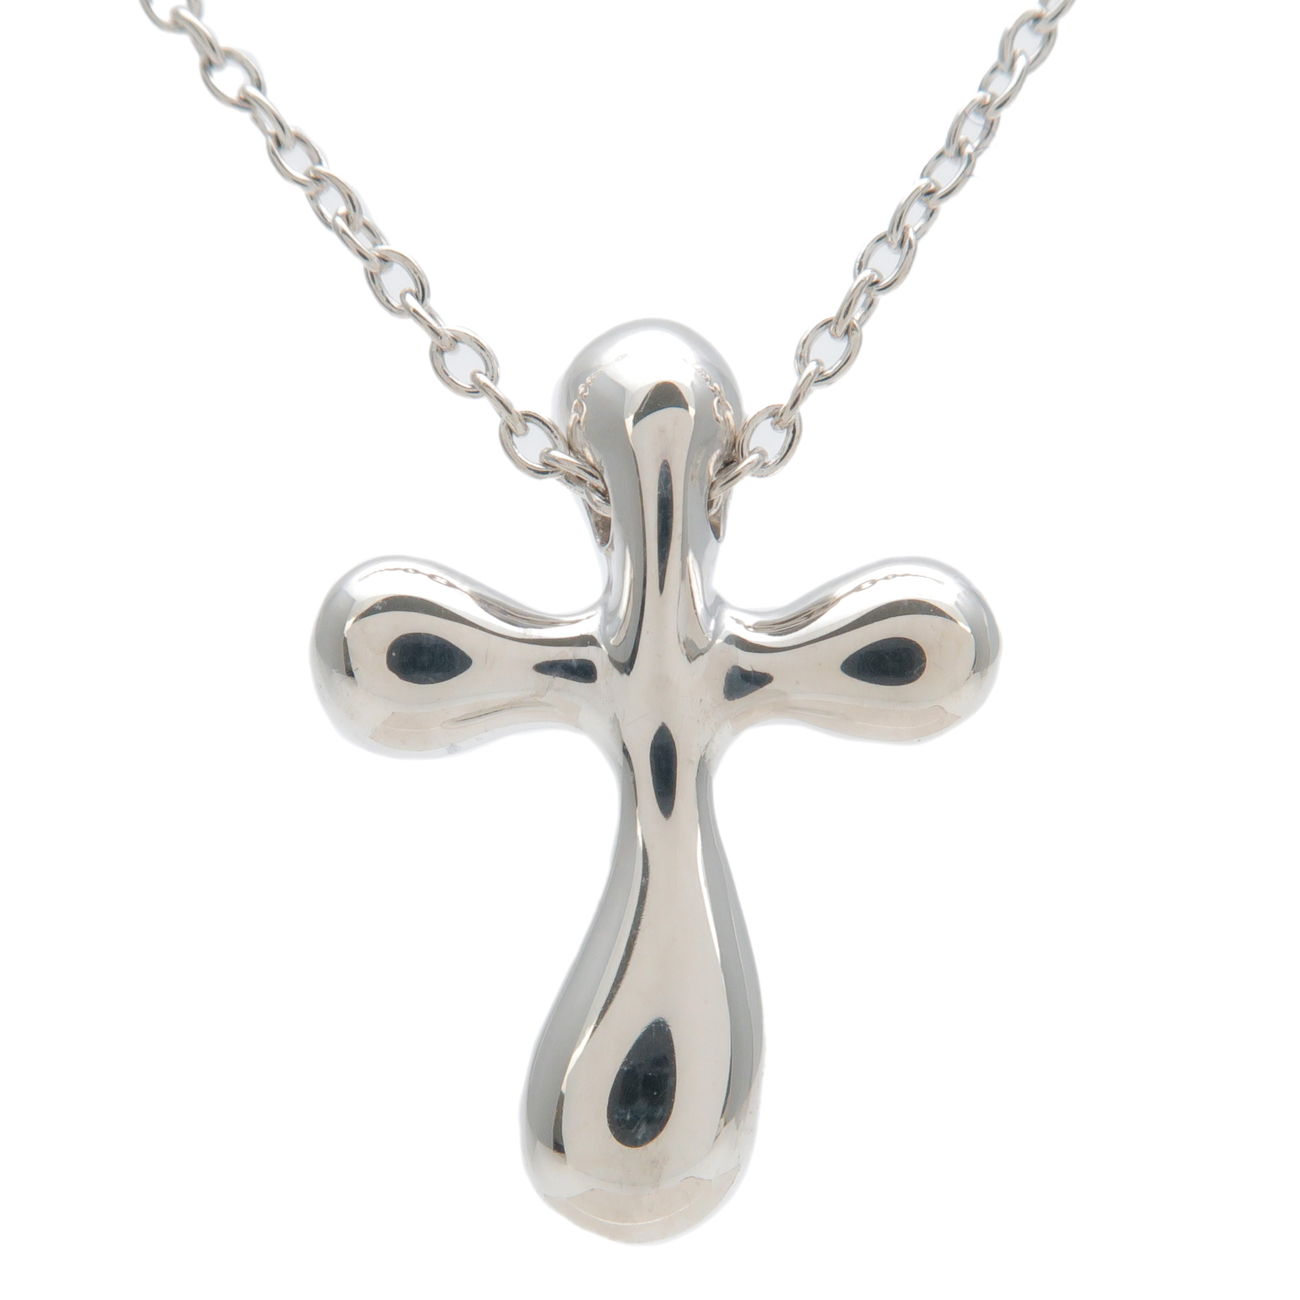 Tiffany&Co. Small Cross Pendant Necklace SV925 Silver